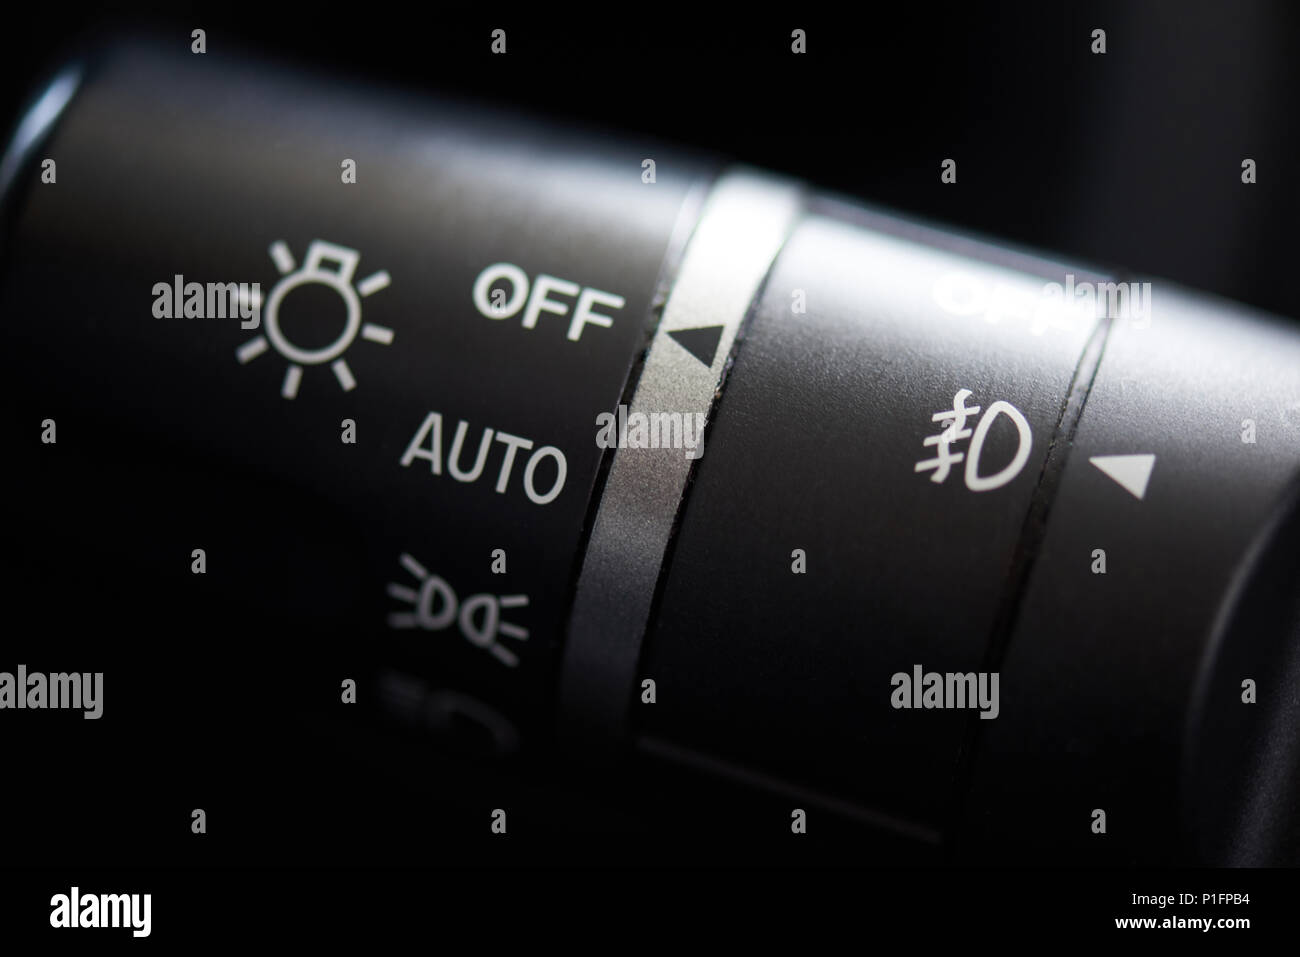 Changing headlight stick of modern car close-up. Car light control system Stock Photo